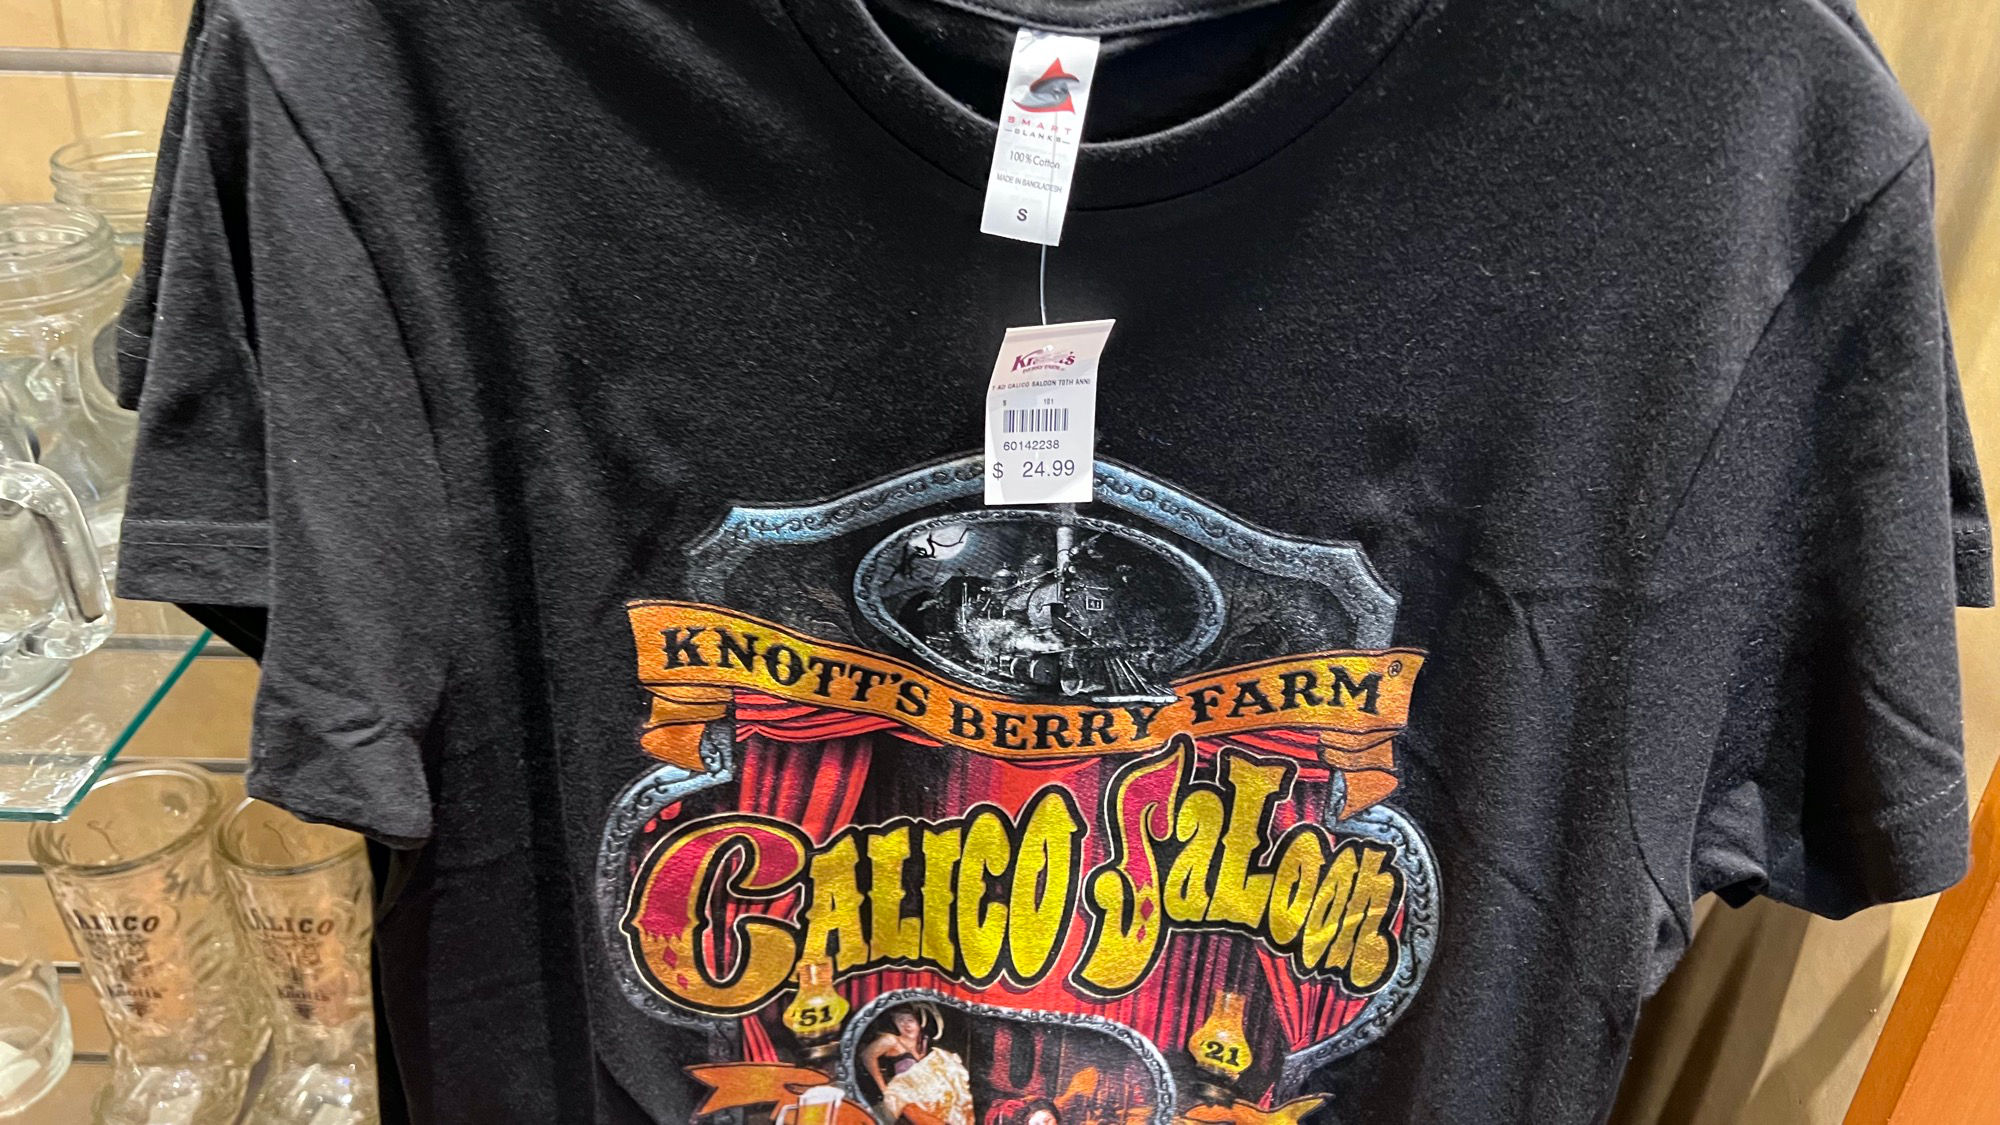 Virginia's Gift Shop Calico Saloon Shirts